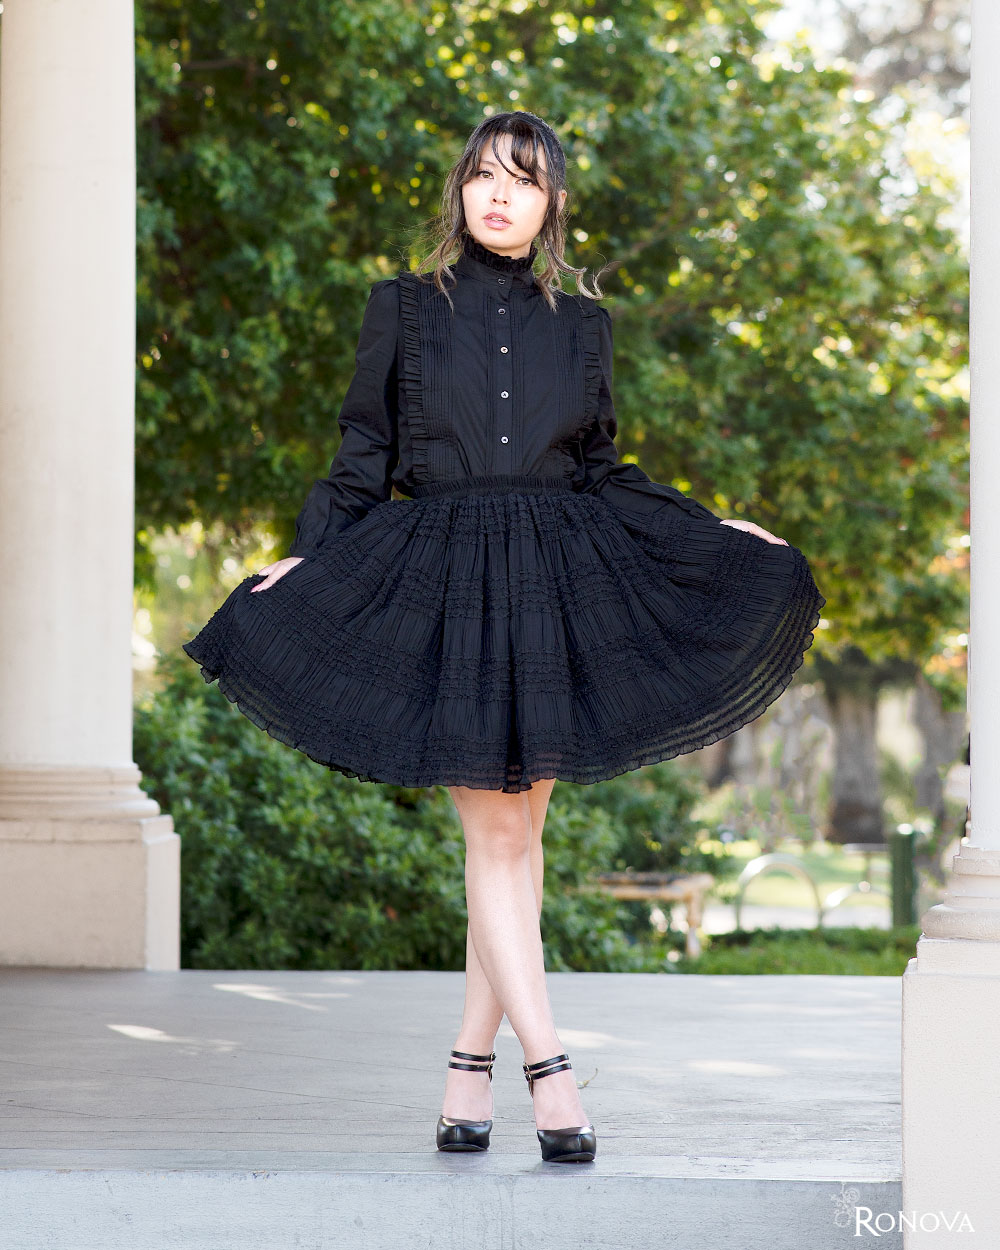 Ronova Pleated Ruffled Blouse and Petticoat Skirt in Black